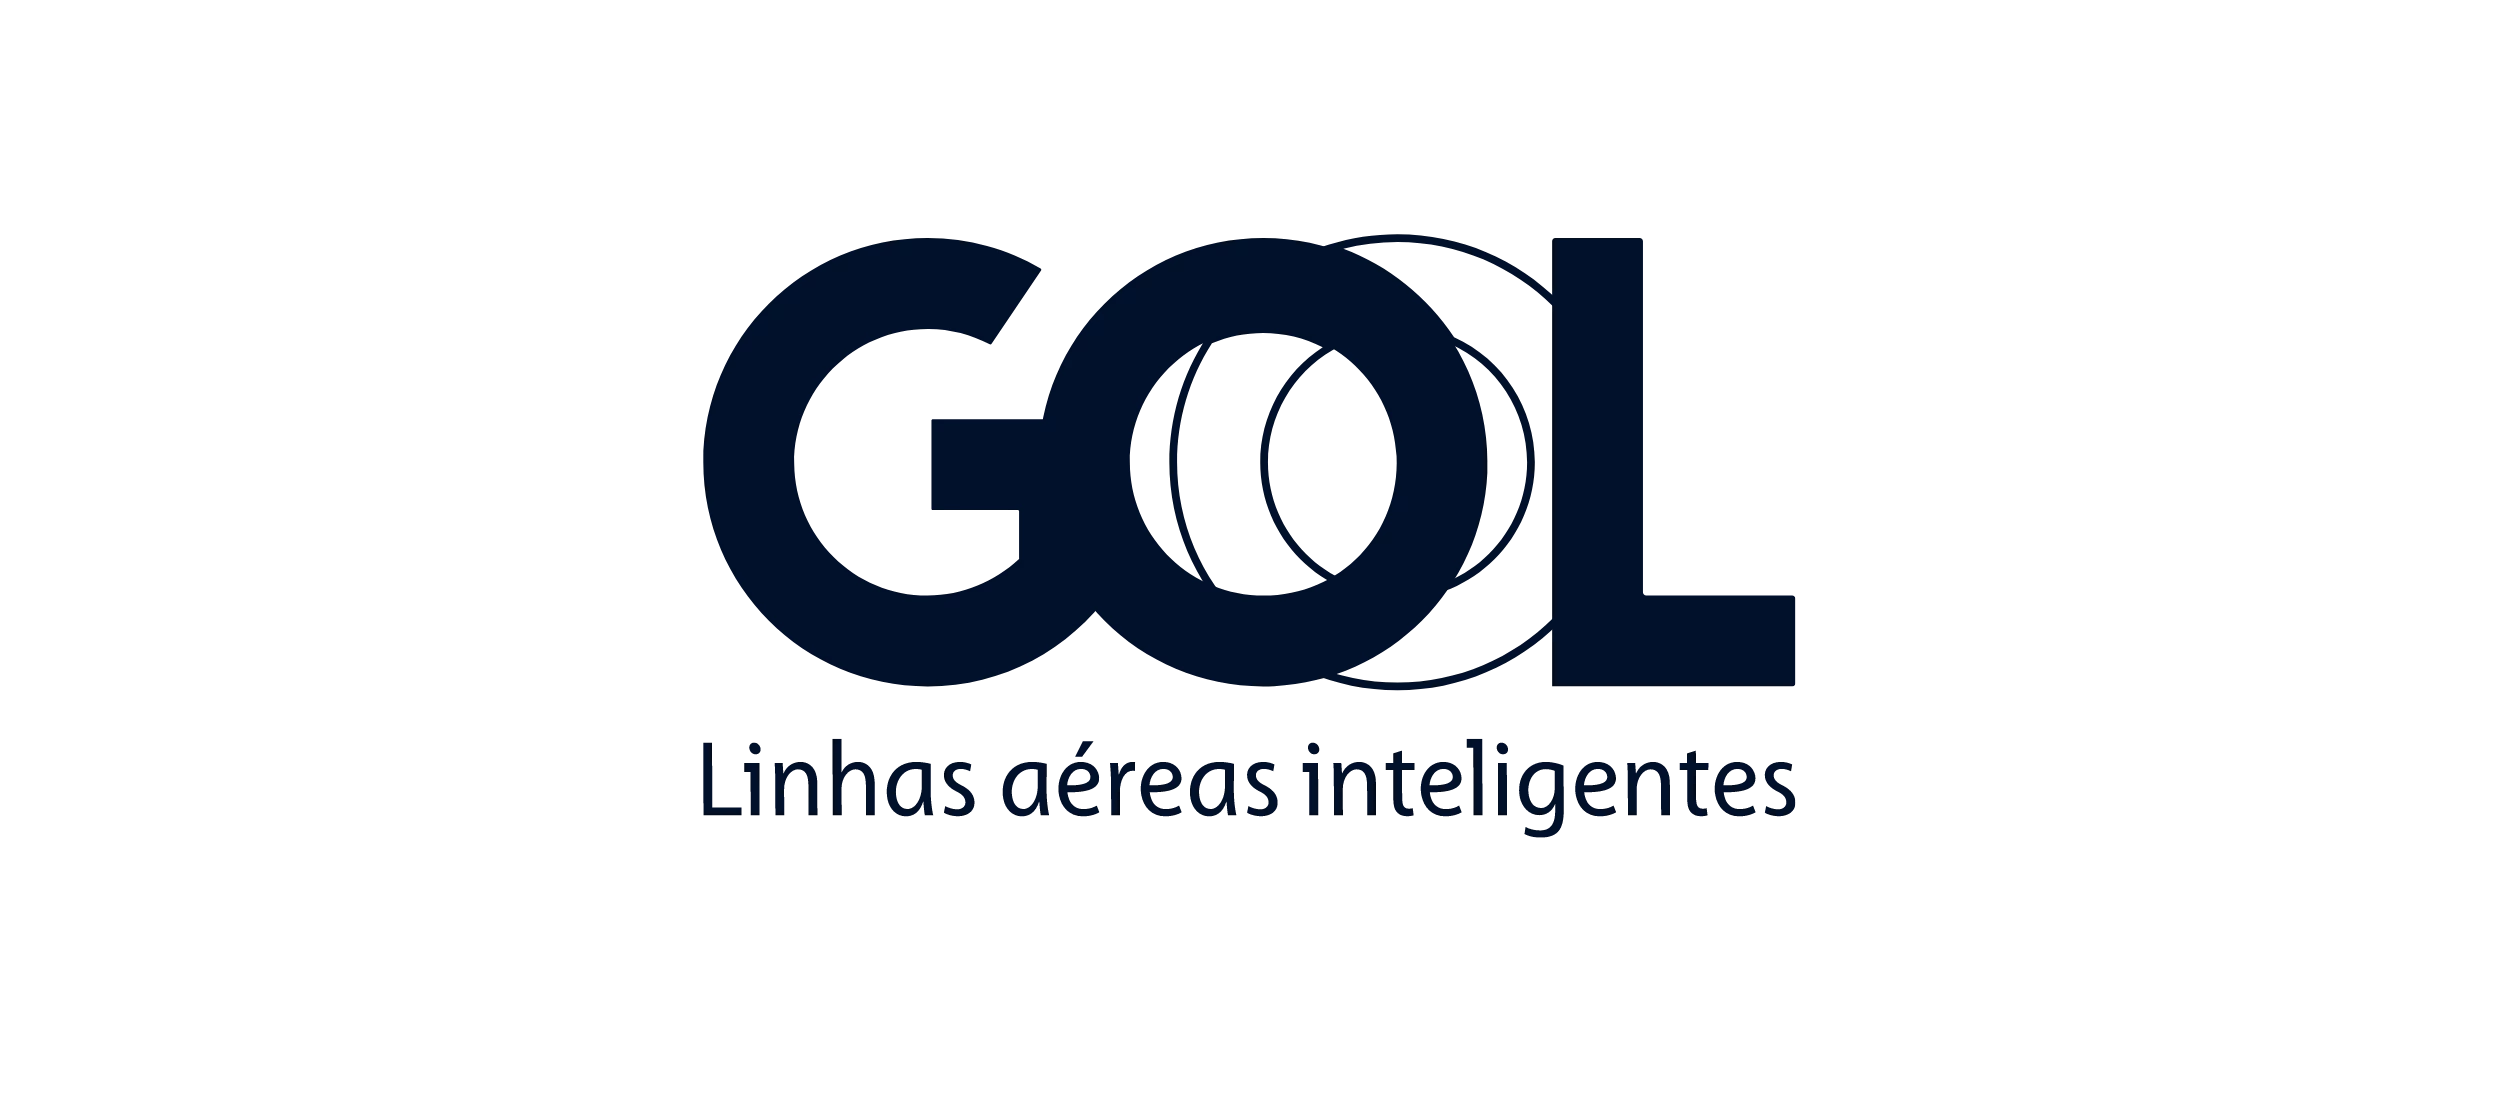 Logo Gol